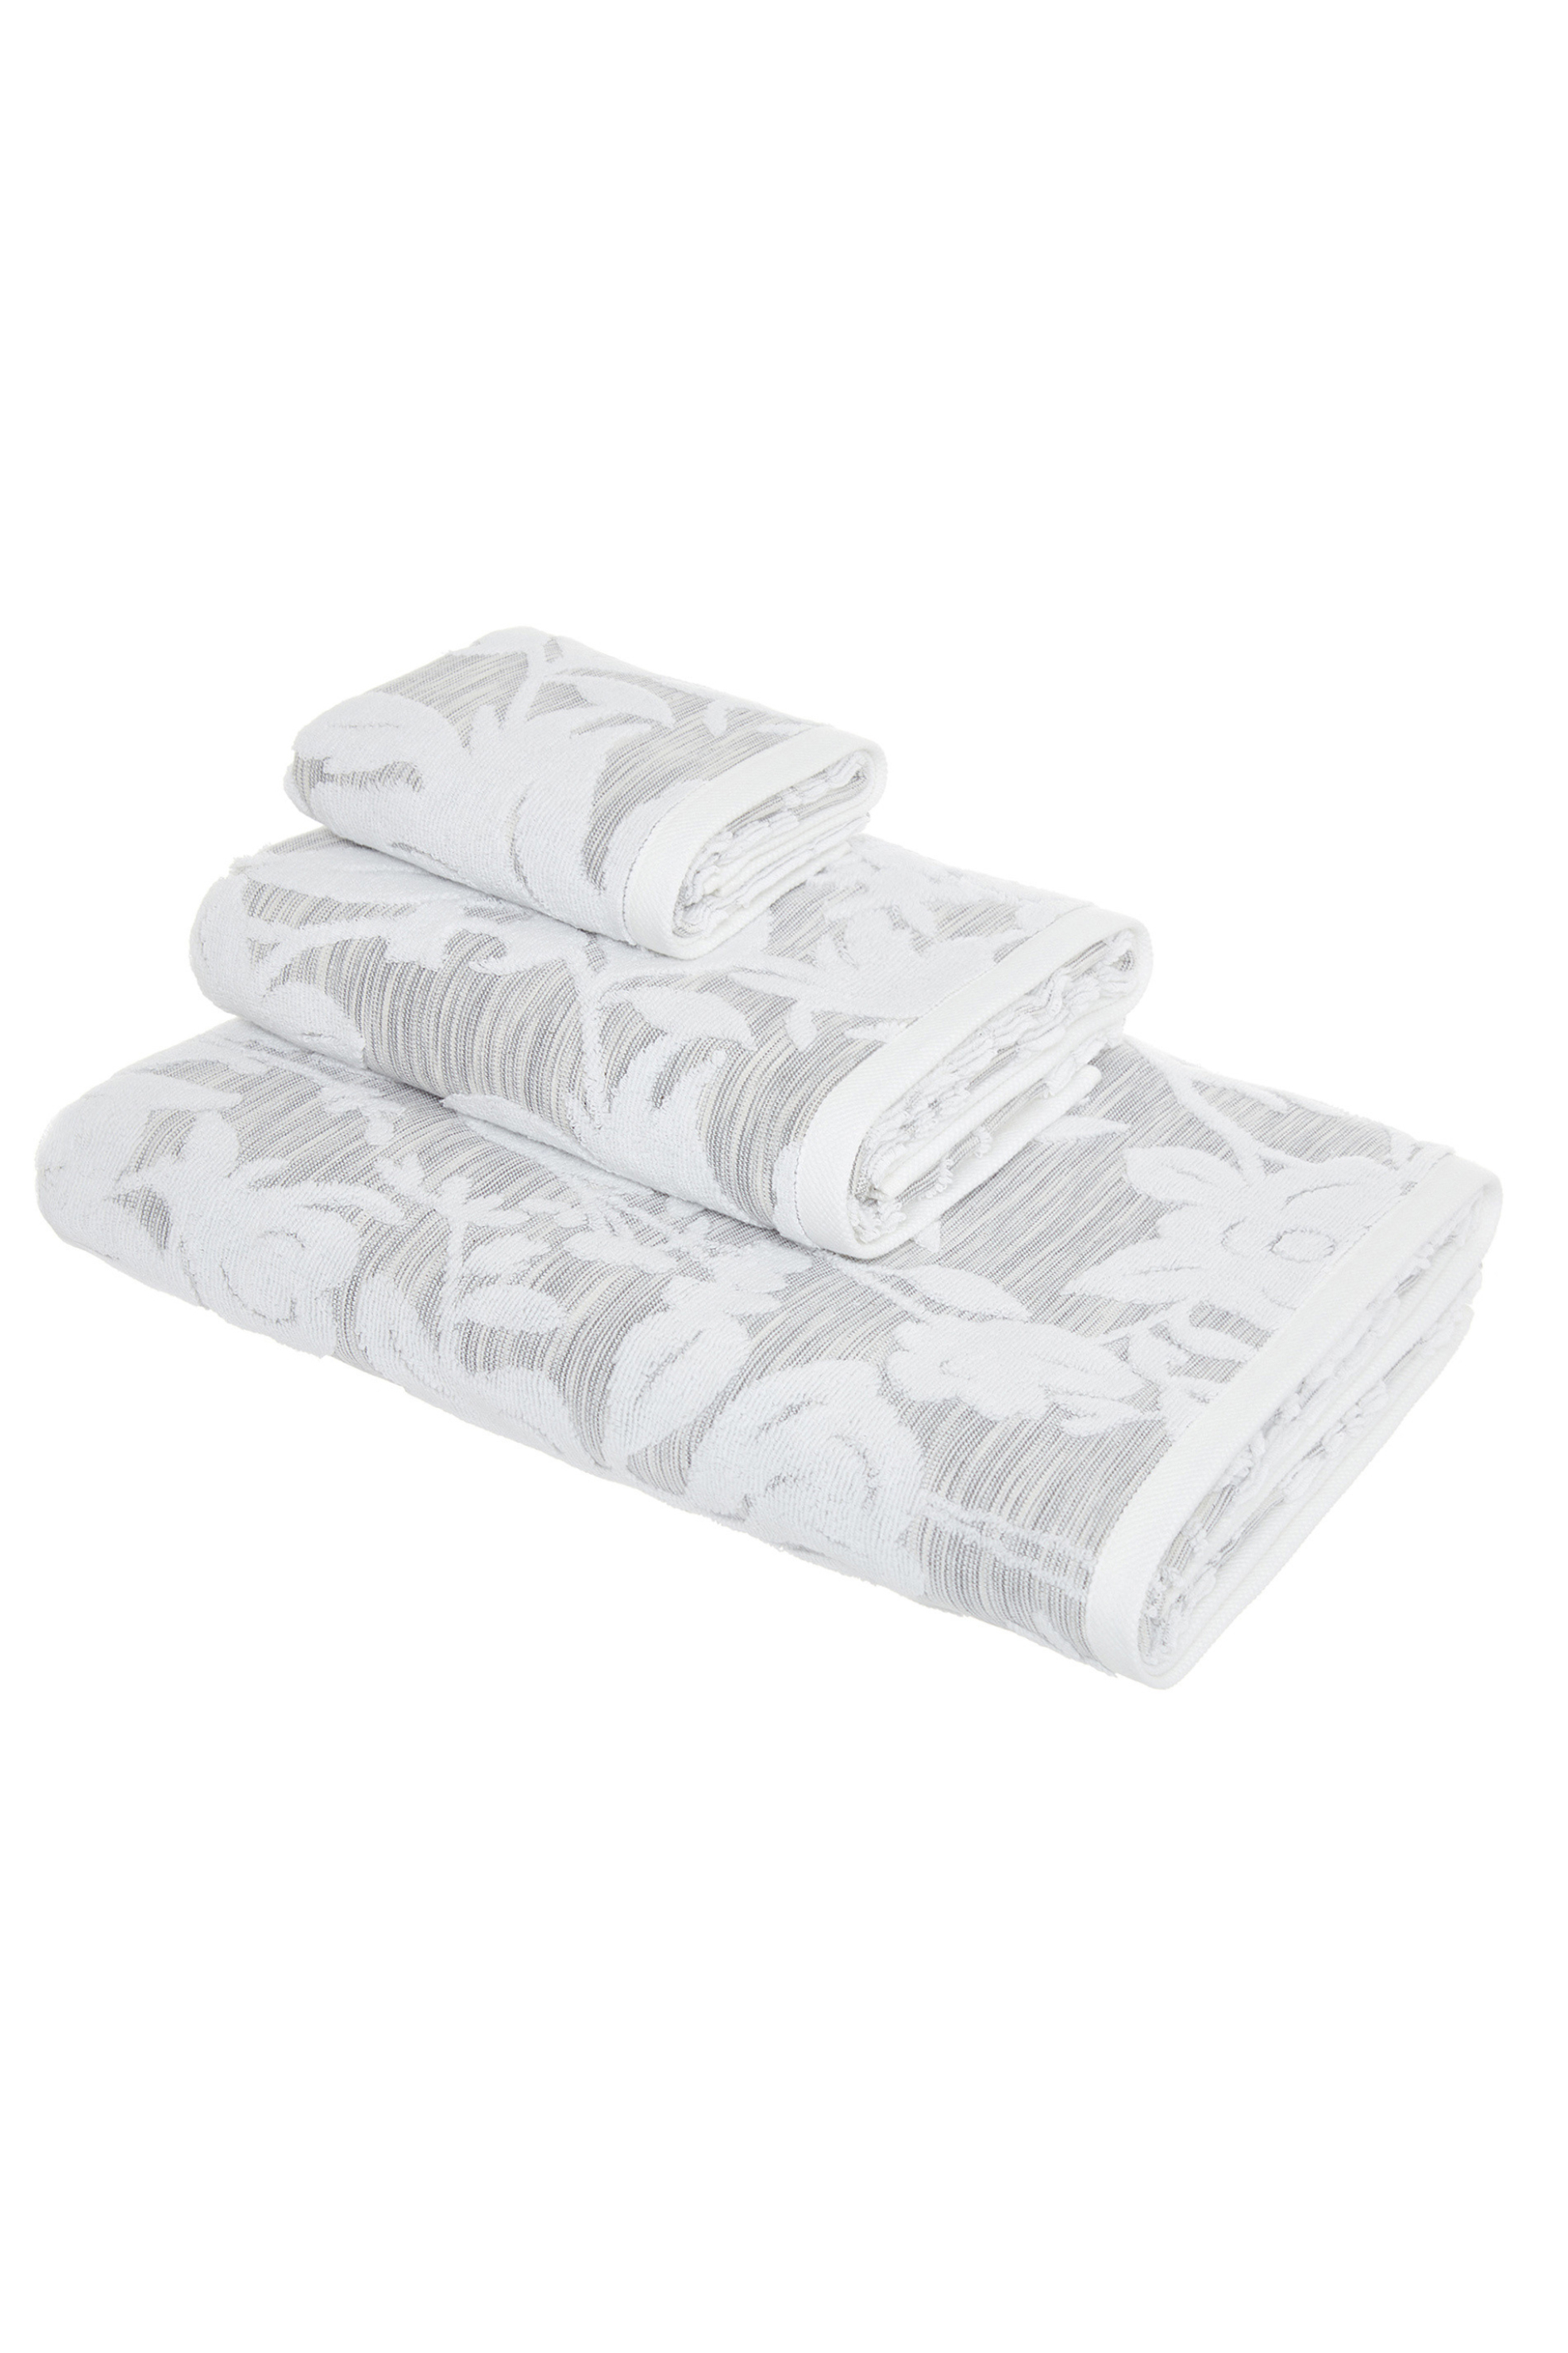 Home > ΜΠΑΝΙΟ > Πετσέτες Μπάνιου > Πετσέτες Προσώπου Coincasa πετσέτα προσώπου με floral σχέδιο "Portofino" 100 x 60 cm - 007156735 Γκρι